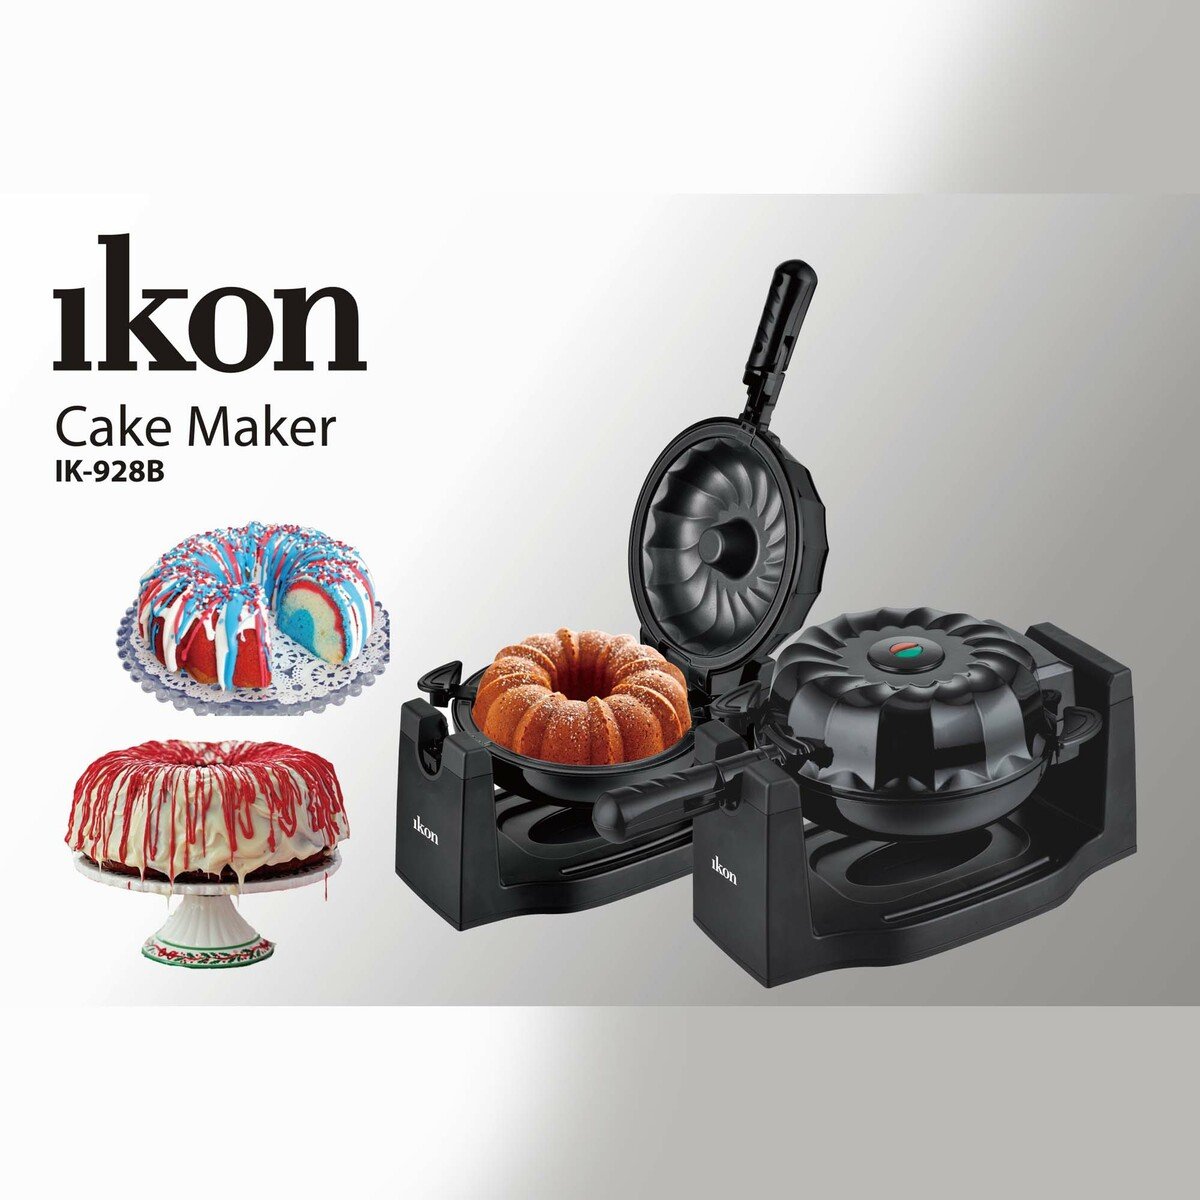 Ikon Cake Maker IK-928B